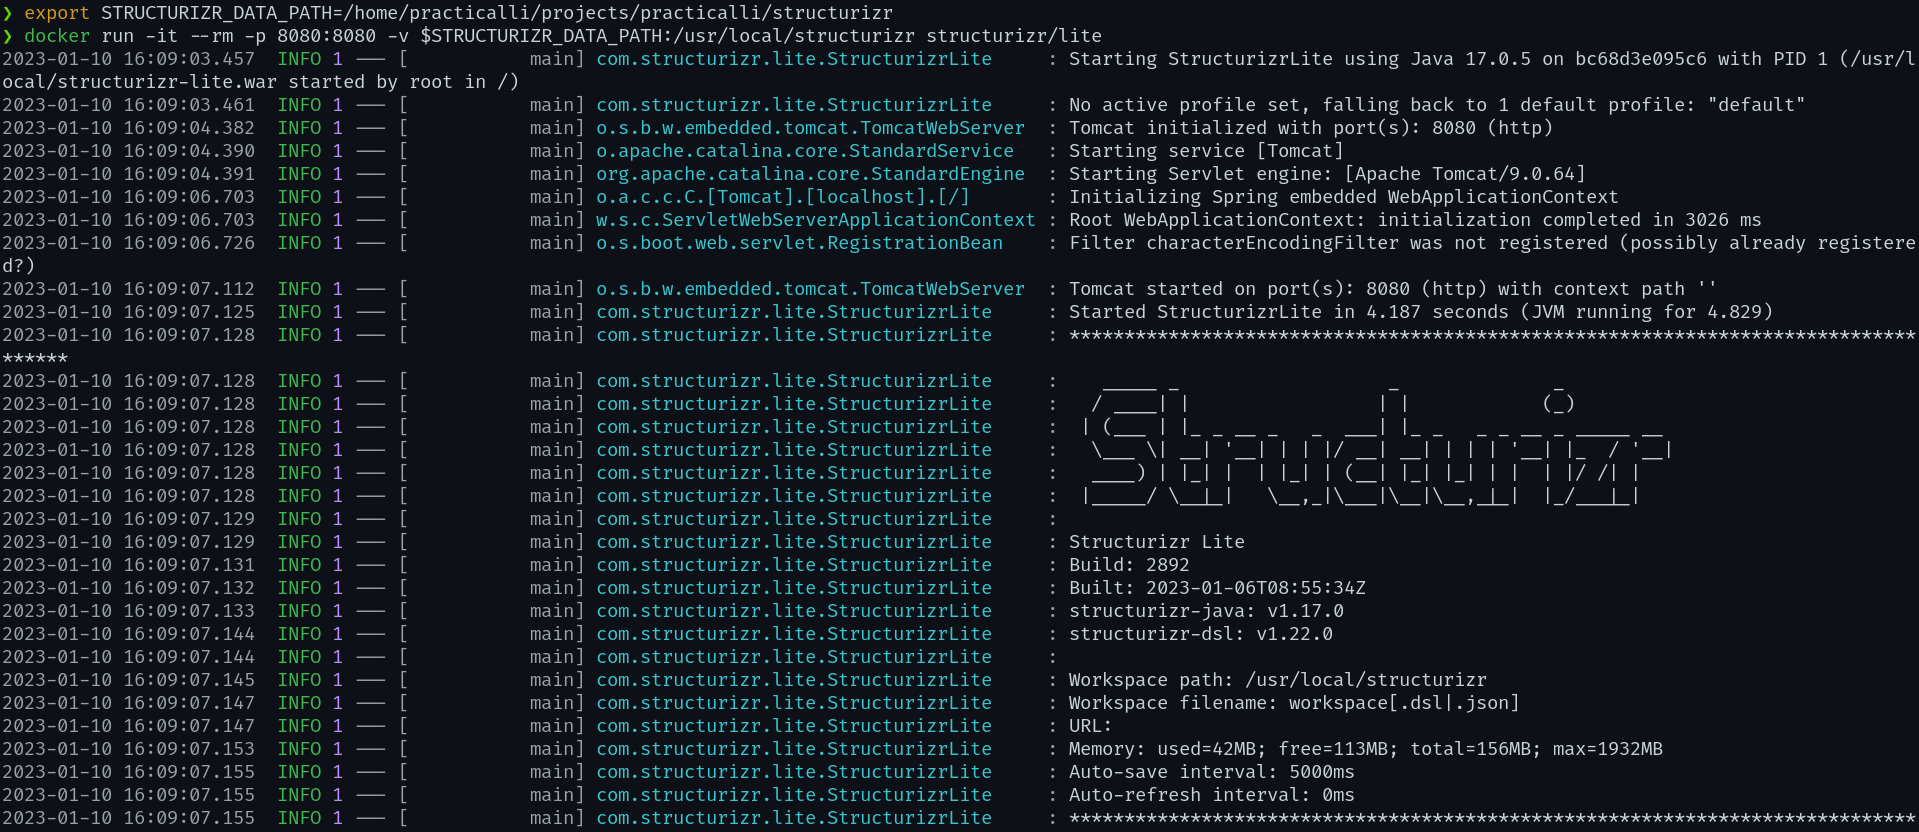 Structurizr Docker run output